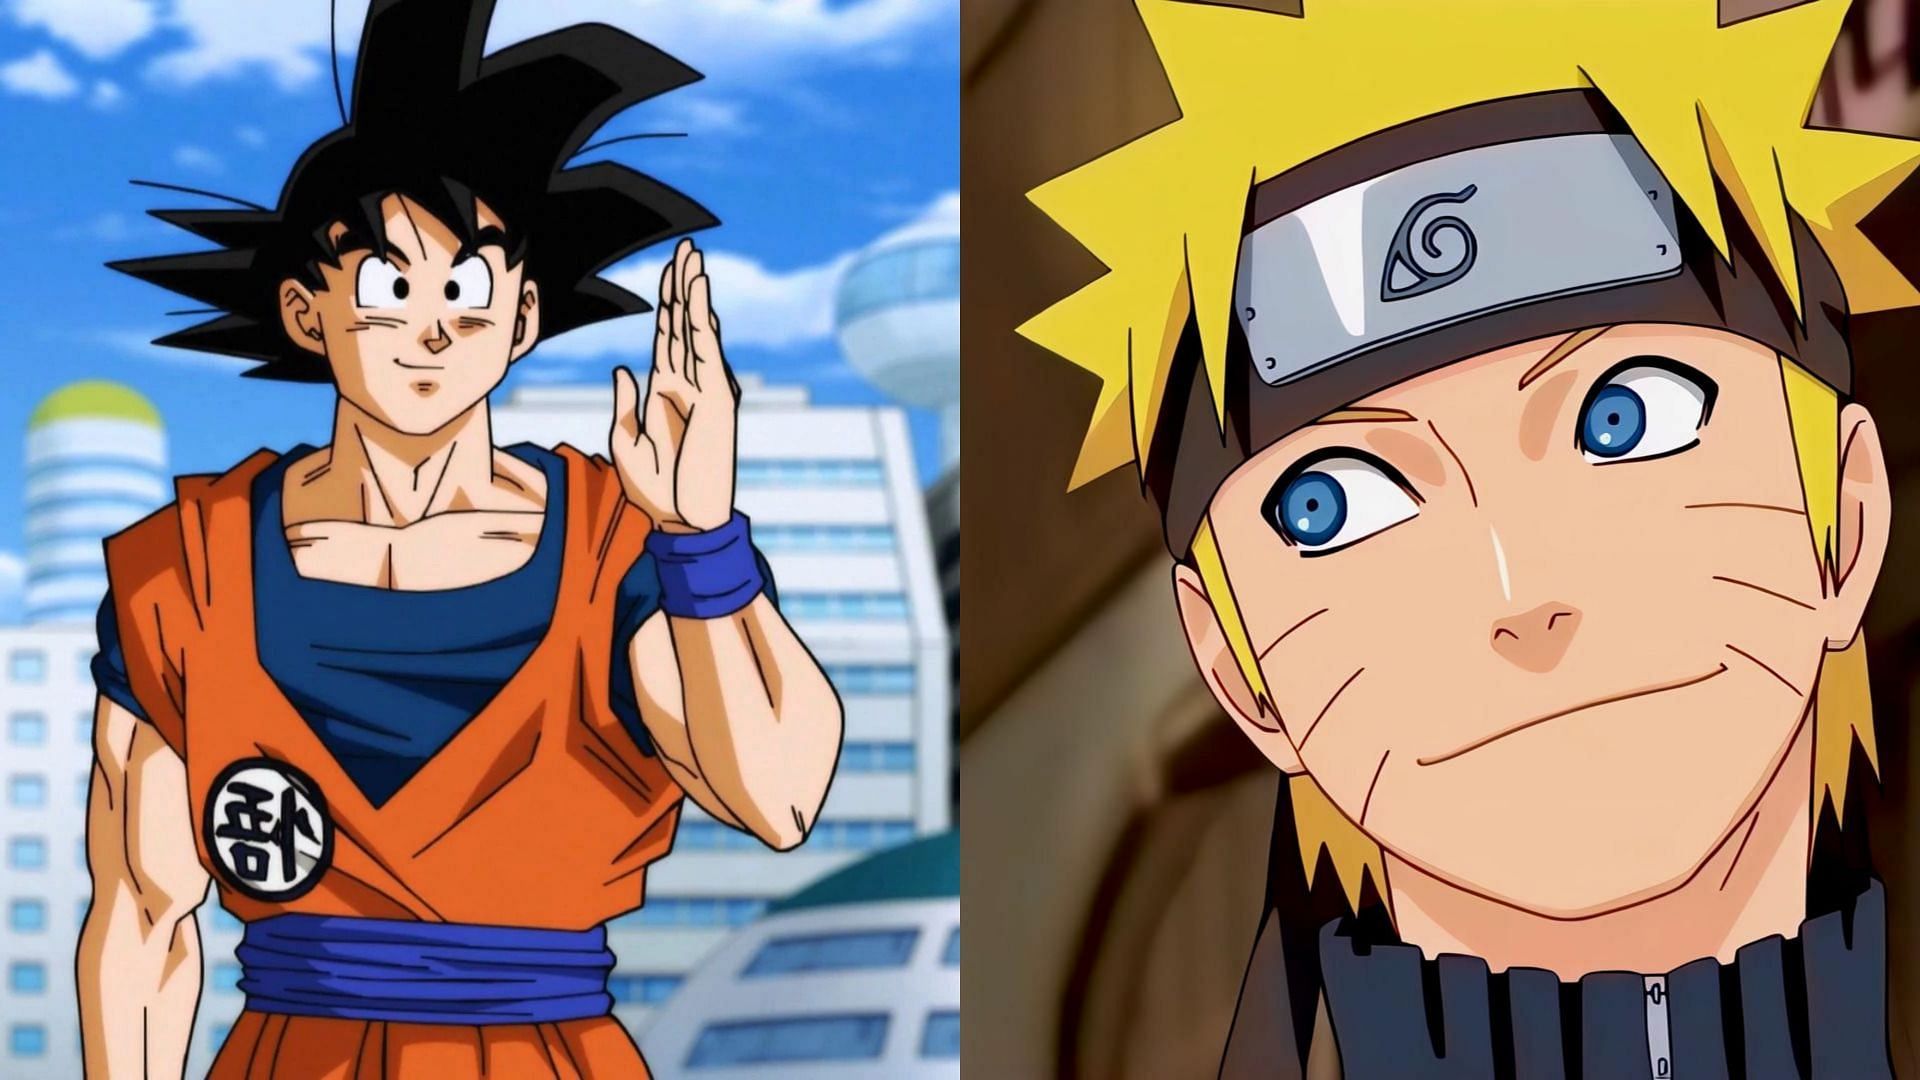 Naruto also took inspiration from Goku (Image via Toei Animation and Studio Pierrot)